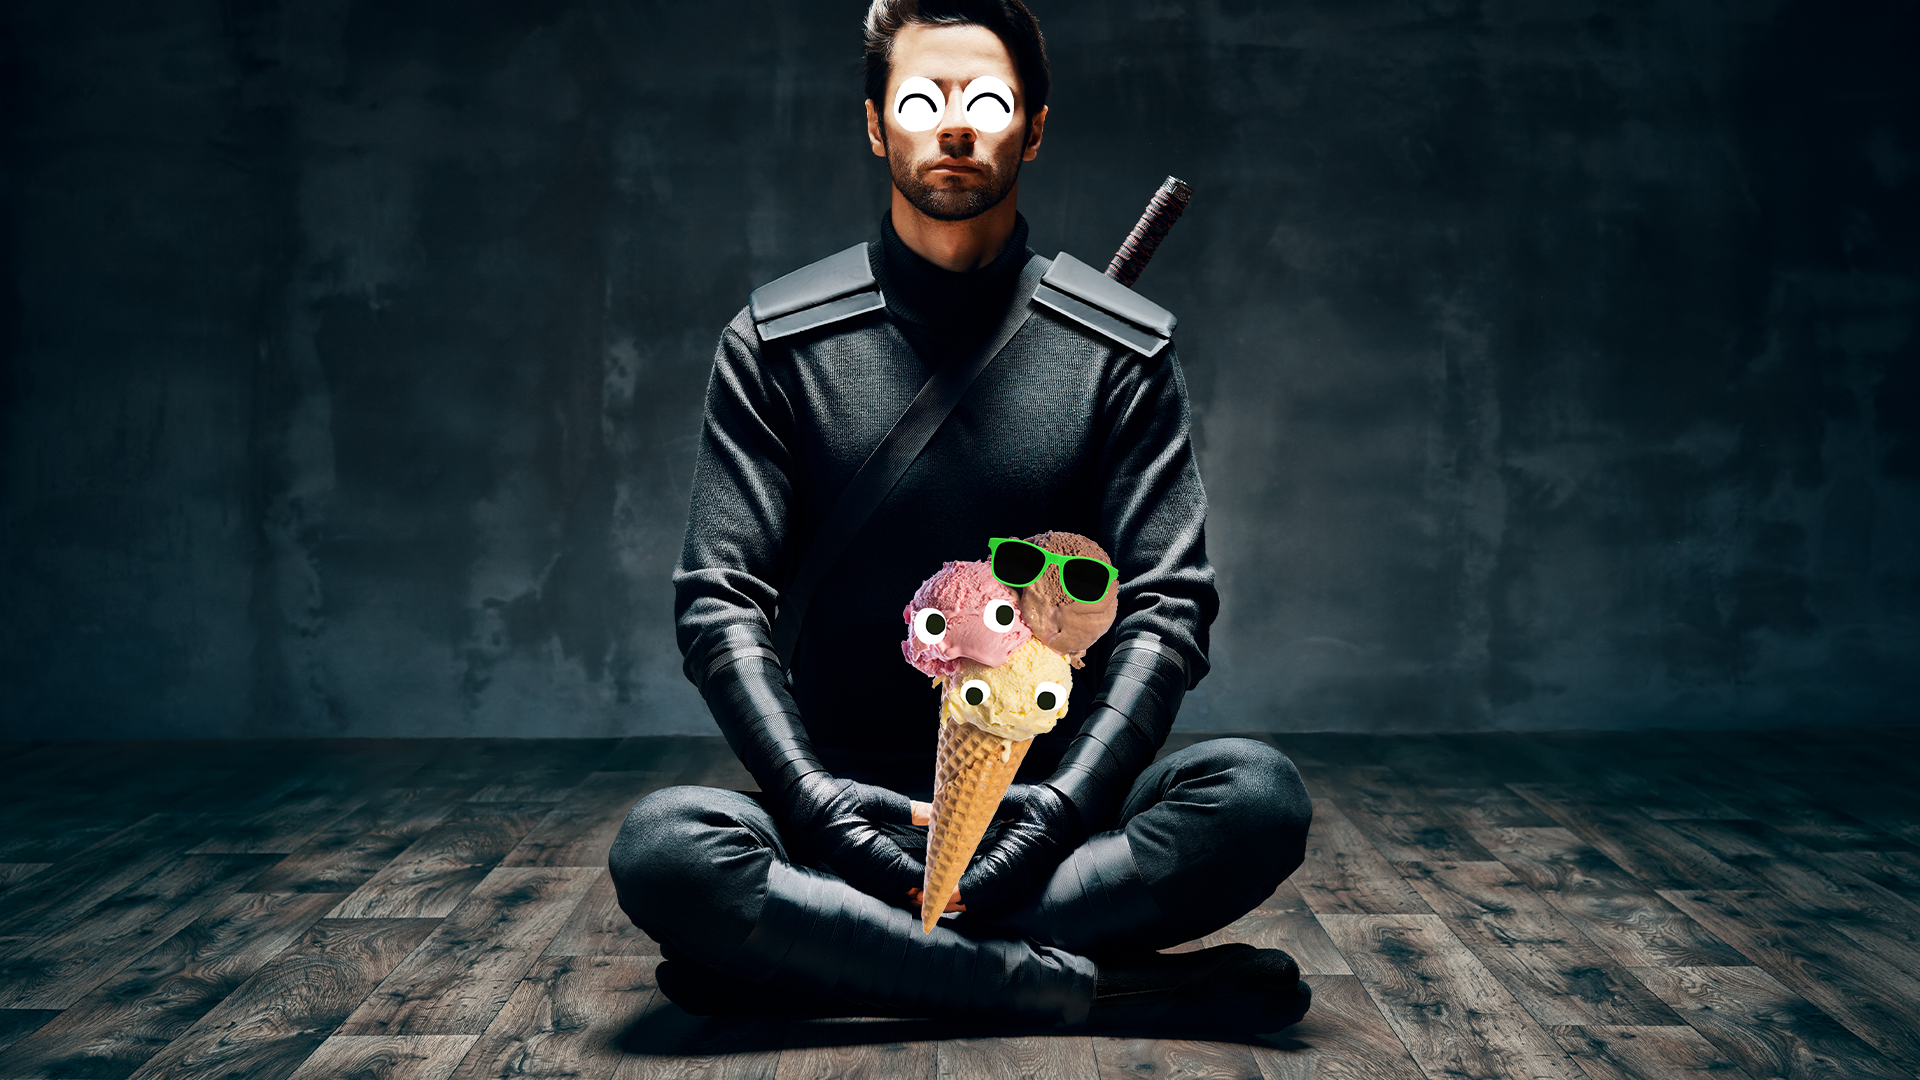 Ninja meditating with ice cream 